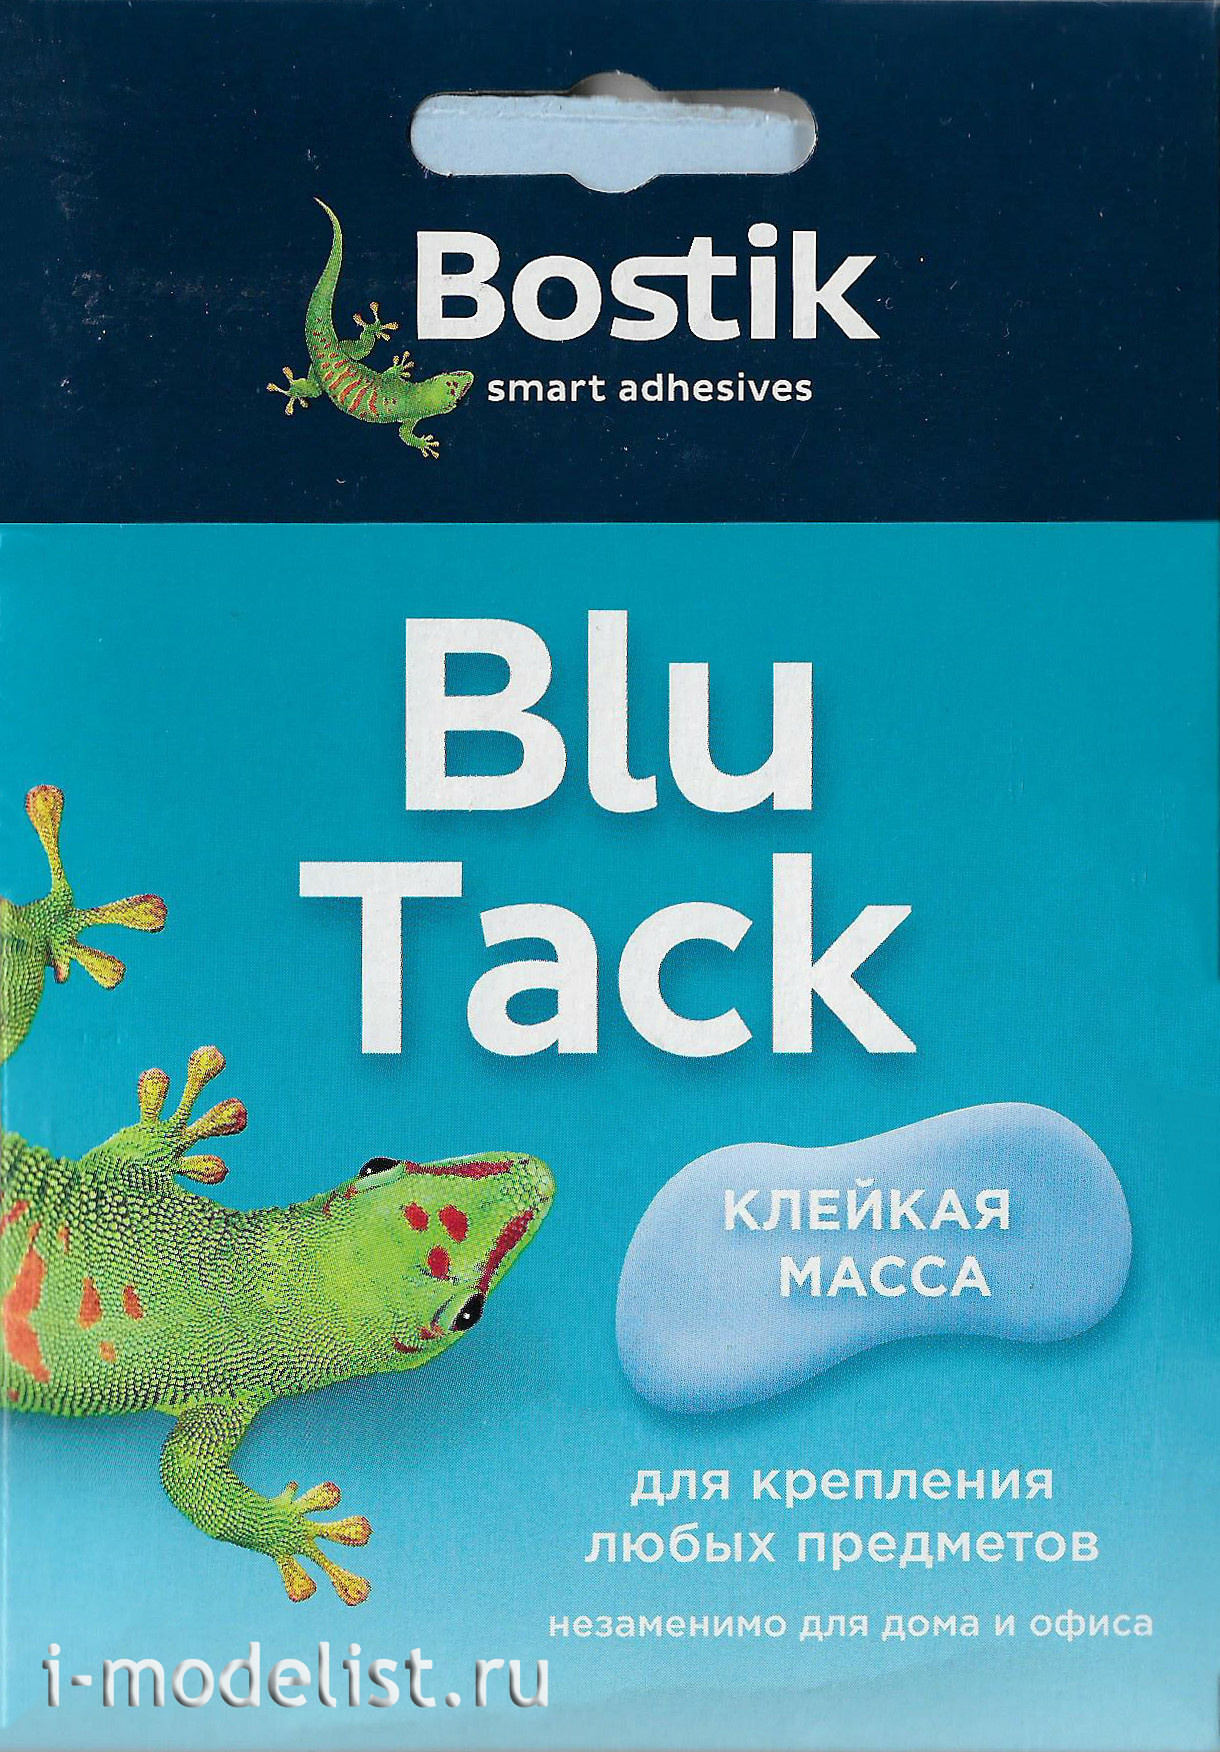 B1 Bostik Клейкая масса пластилин Blu Tack, 45 грамм